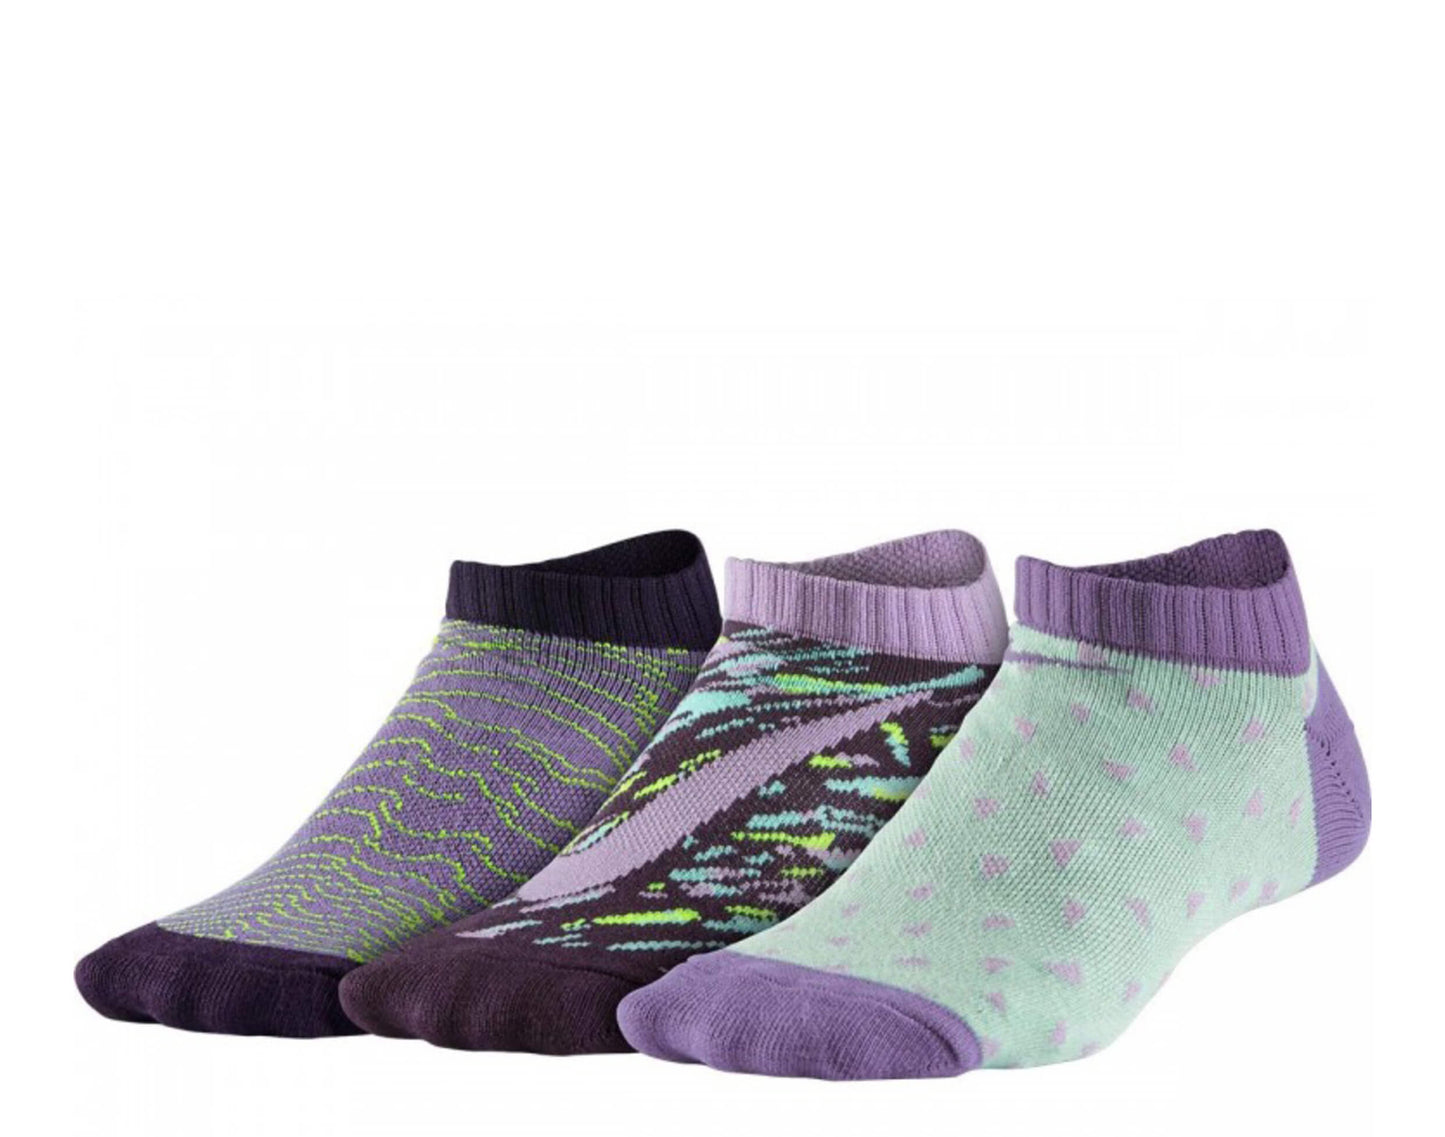 Nike Perfomance Lightweight No-Show Little Kids Socks - 3 Pair Pack